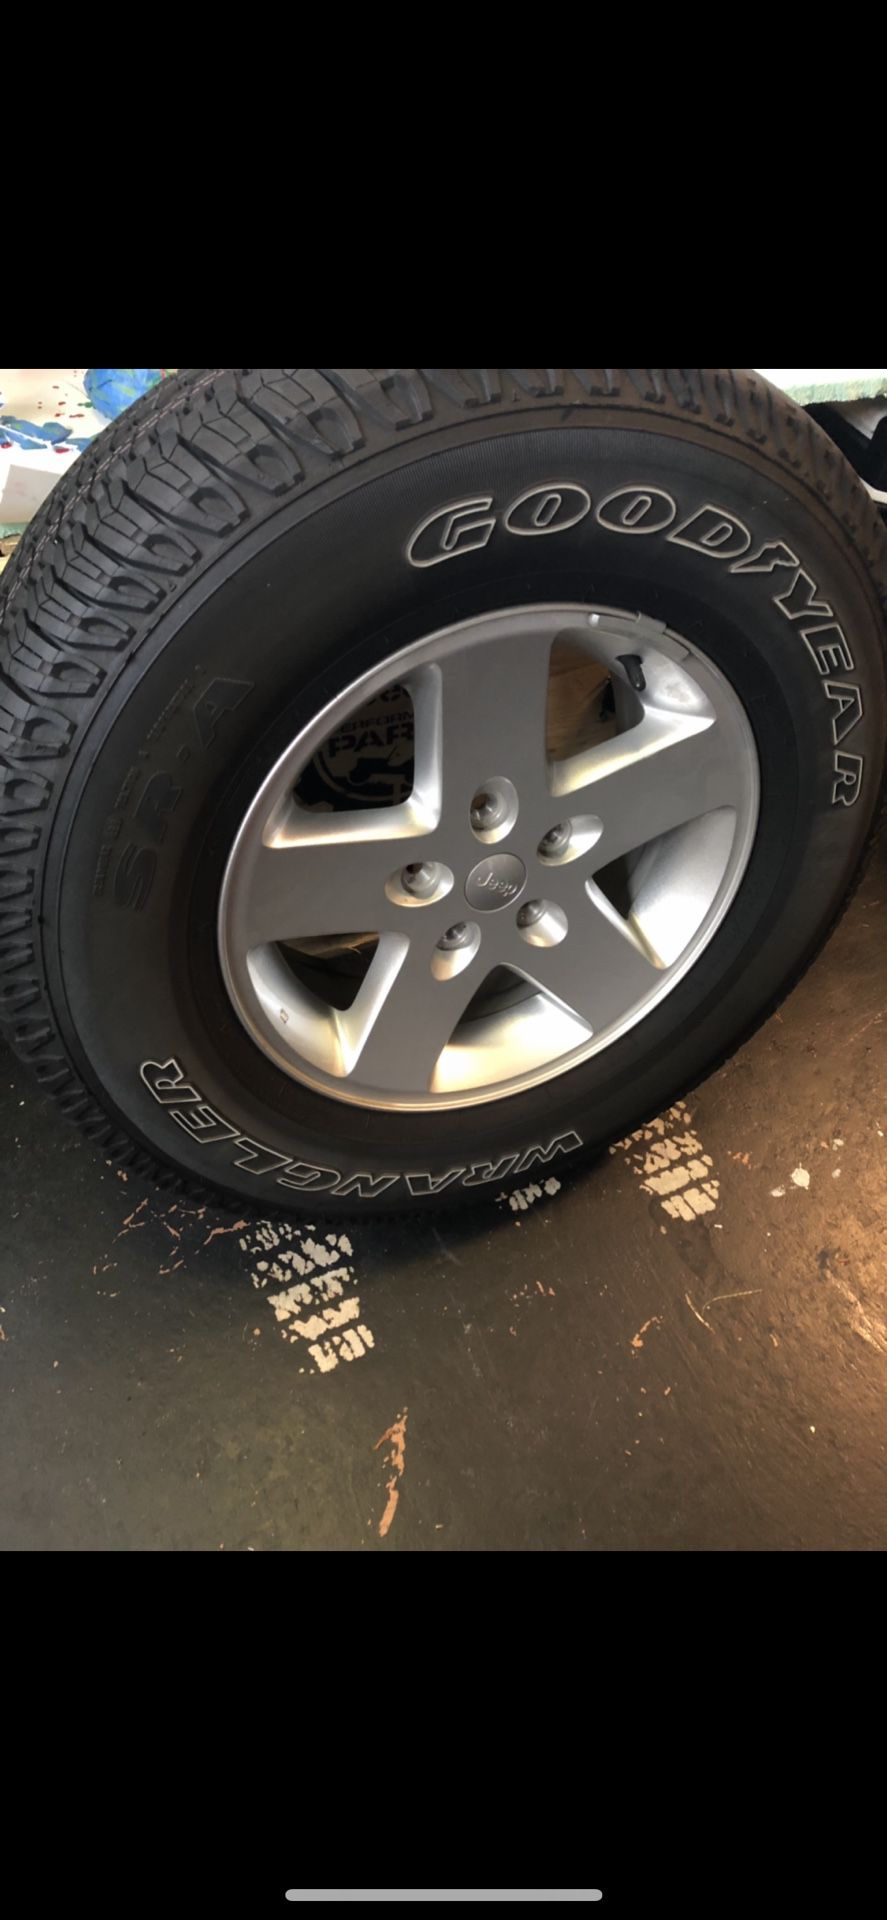 2016 Jeep Wrangler tires